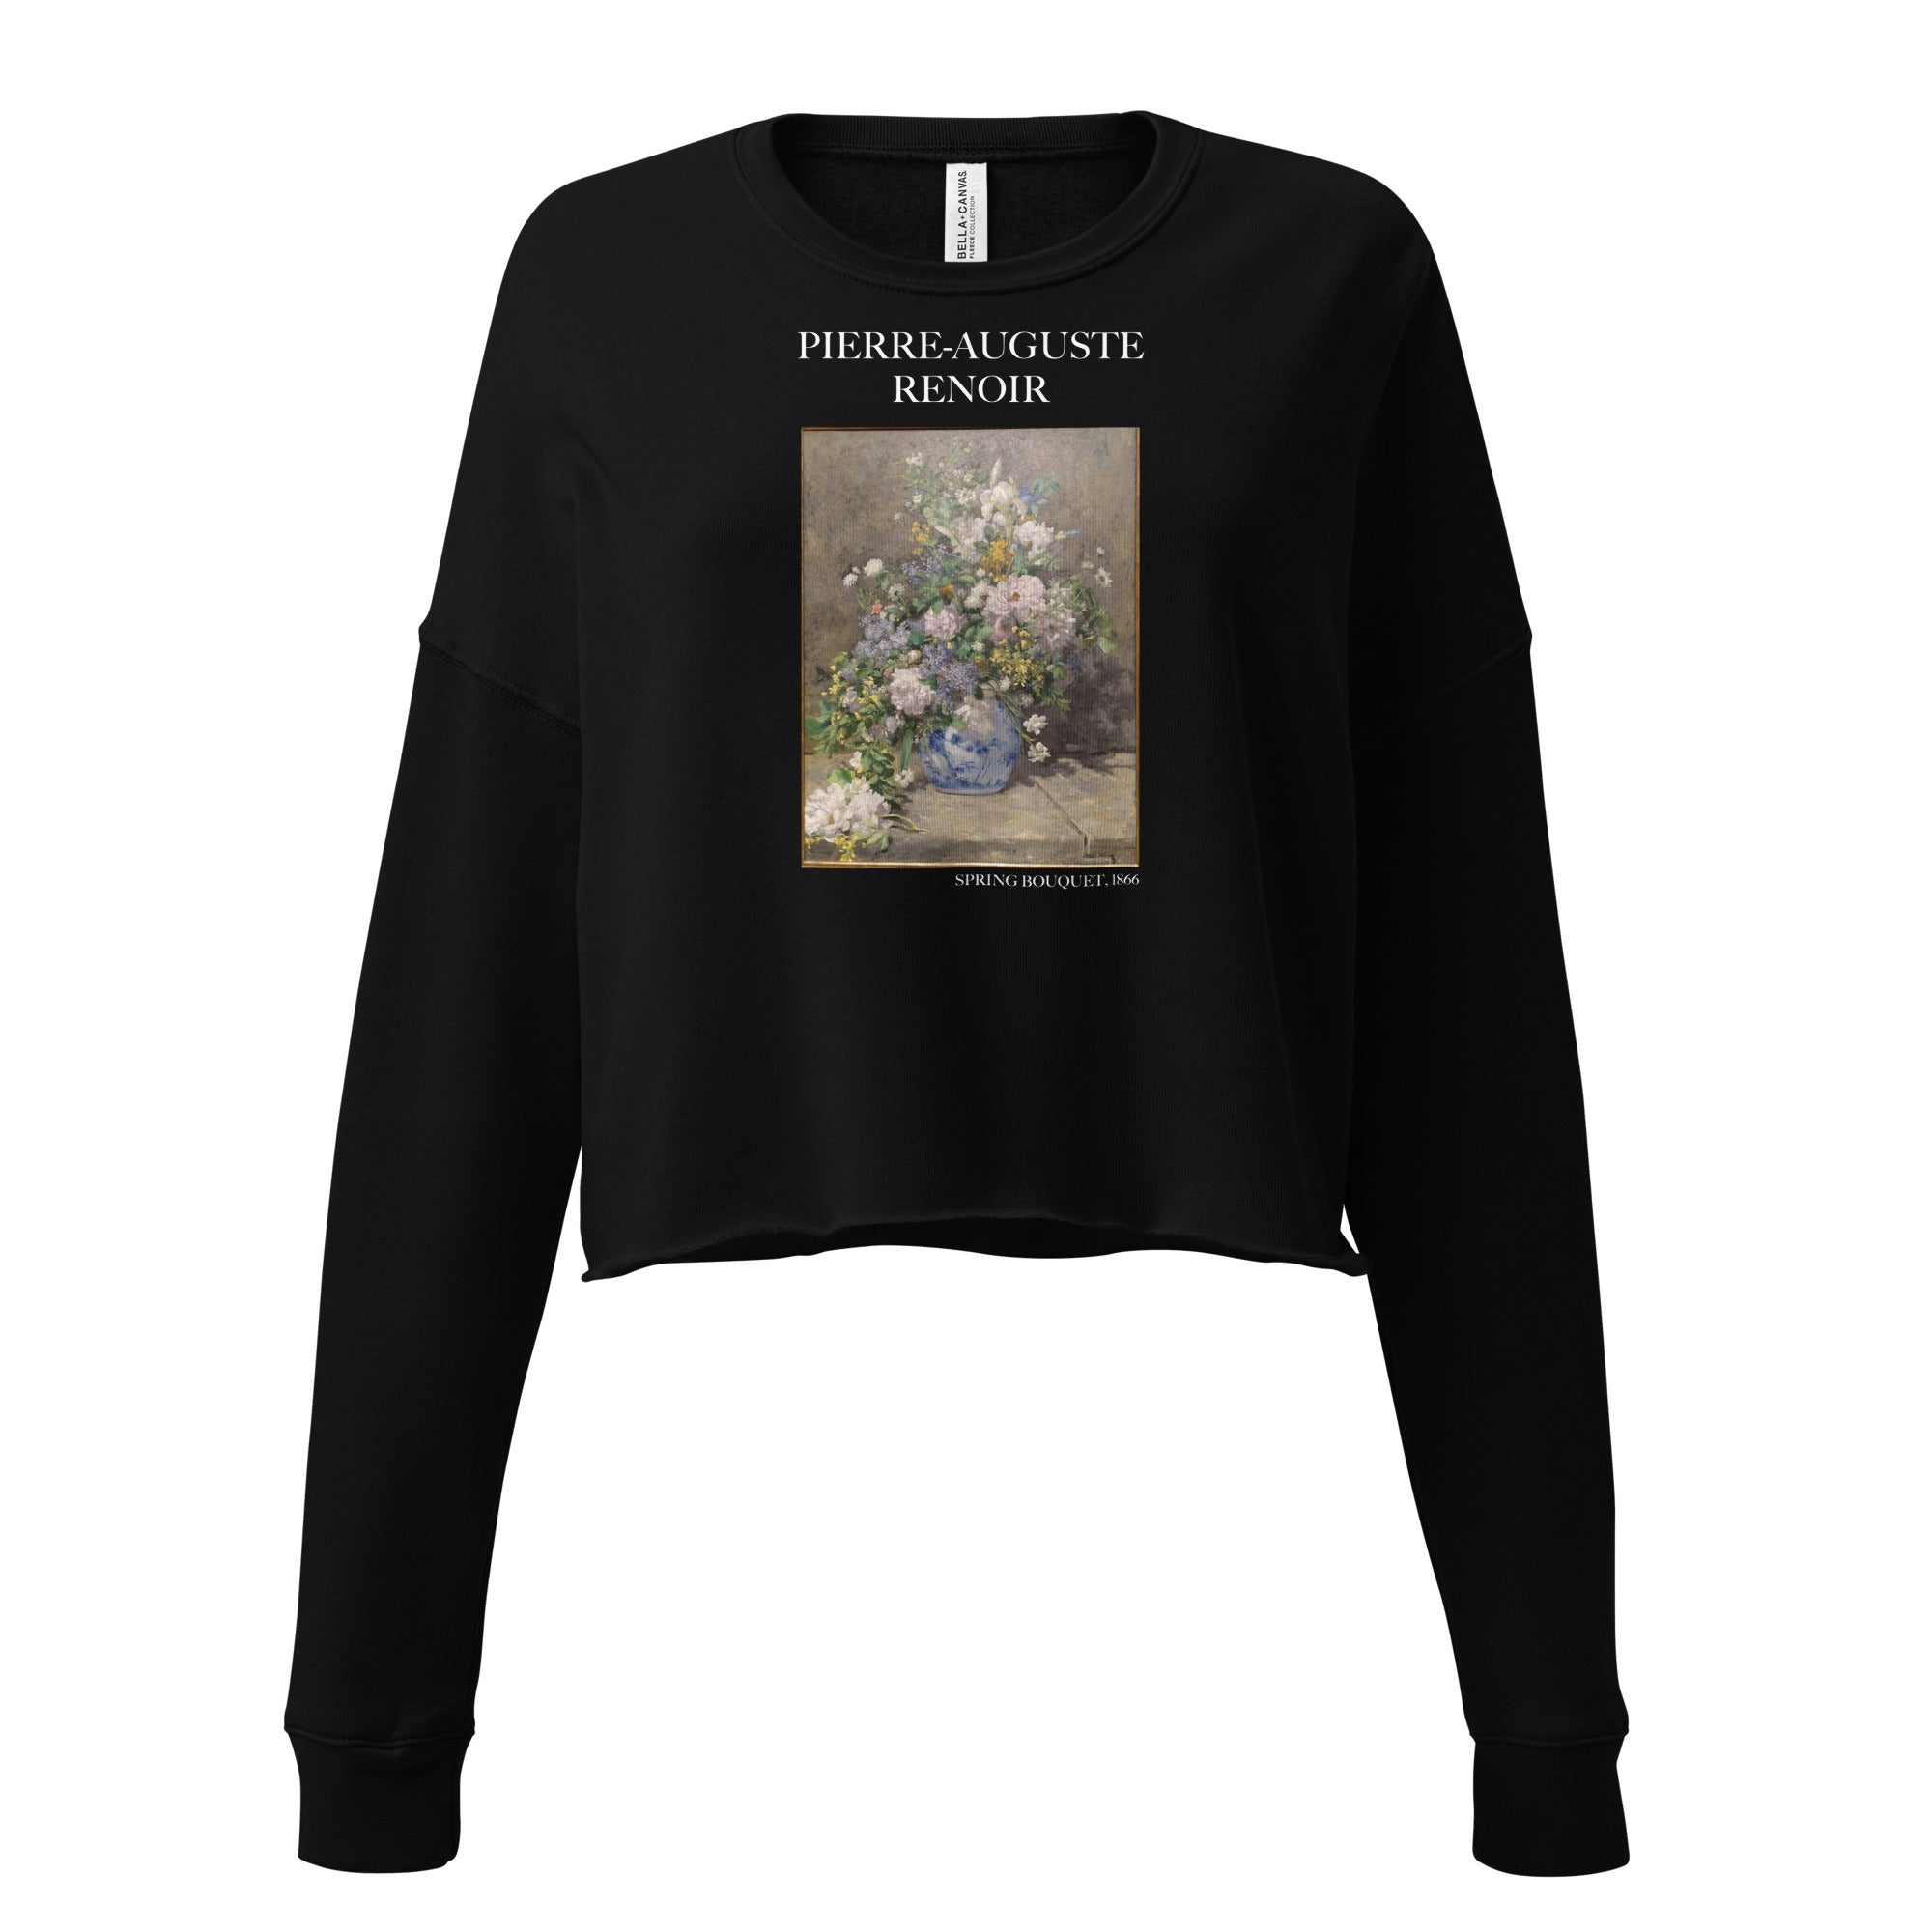 Pierre-Auguste Renoir 'Frühlingsstrauß' Berühmtes Gemälde Kurzes Sweatshirt | Premium Art Kurzes Sweatshirt